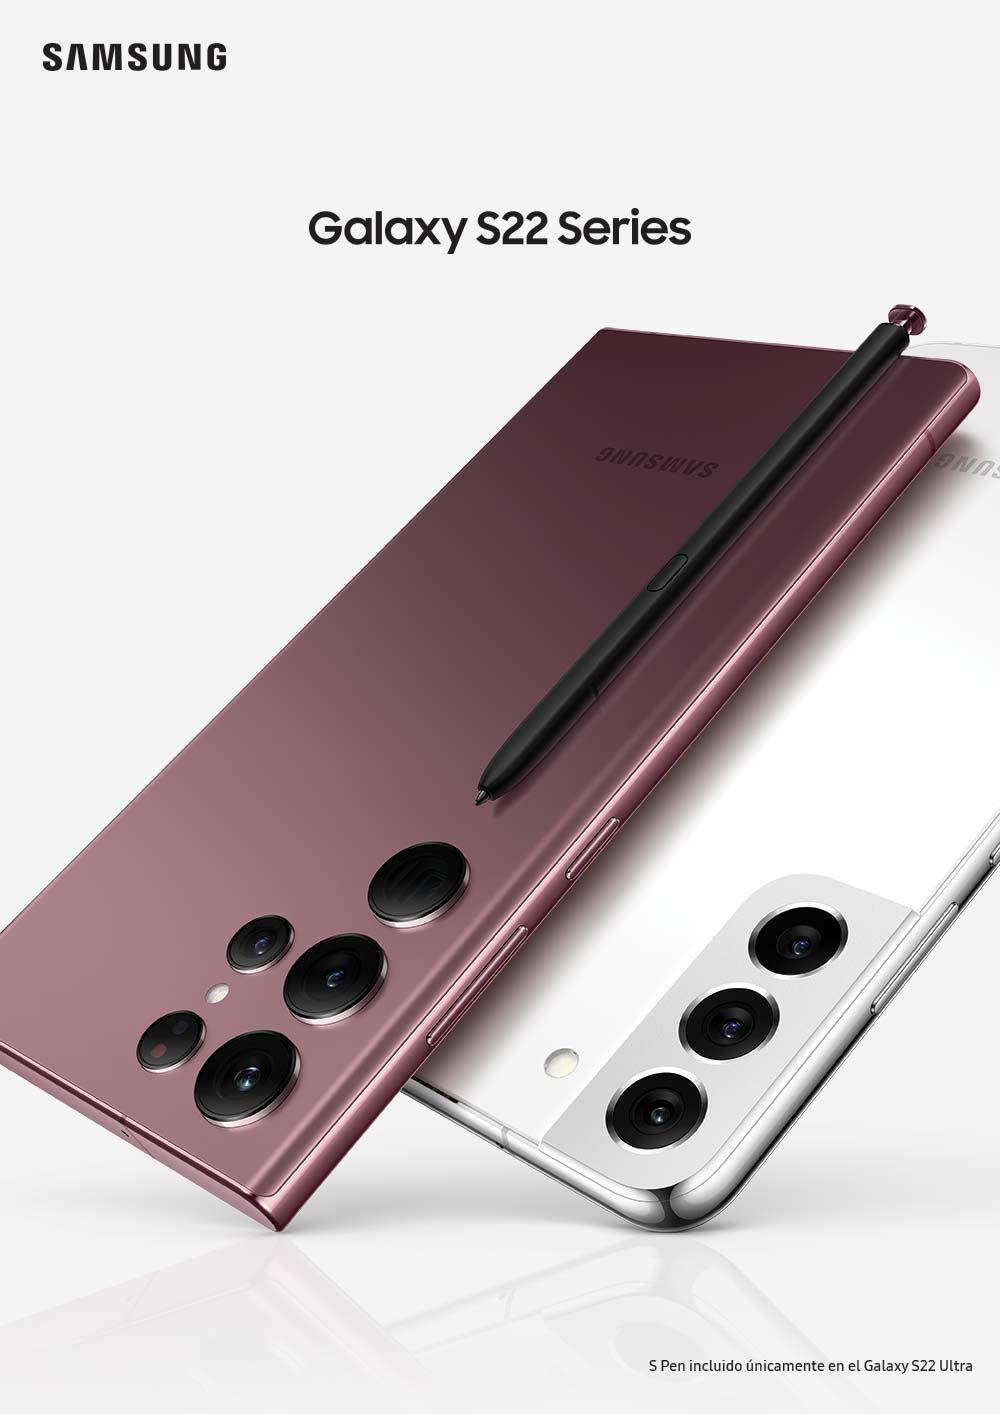 Galaxy S22 Series